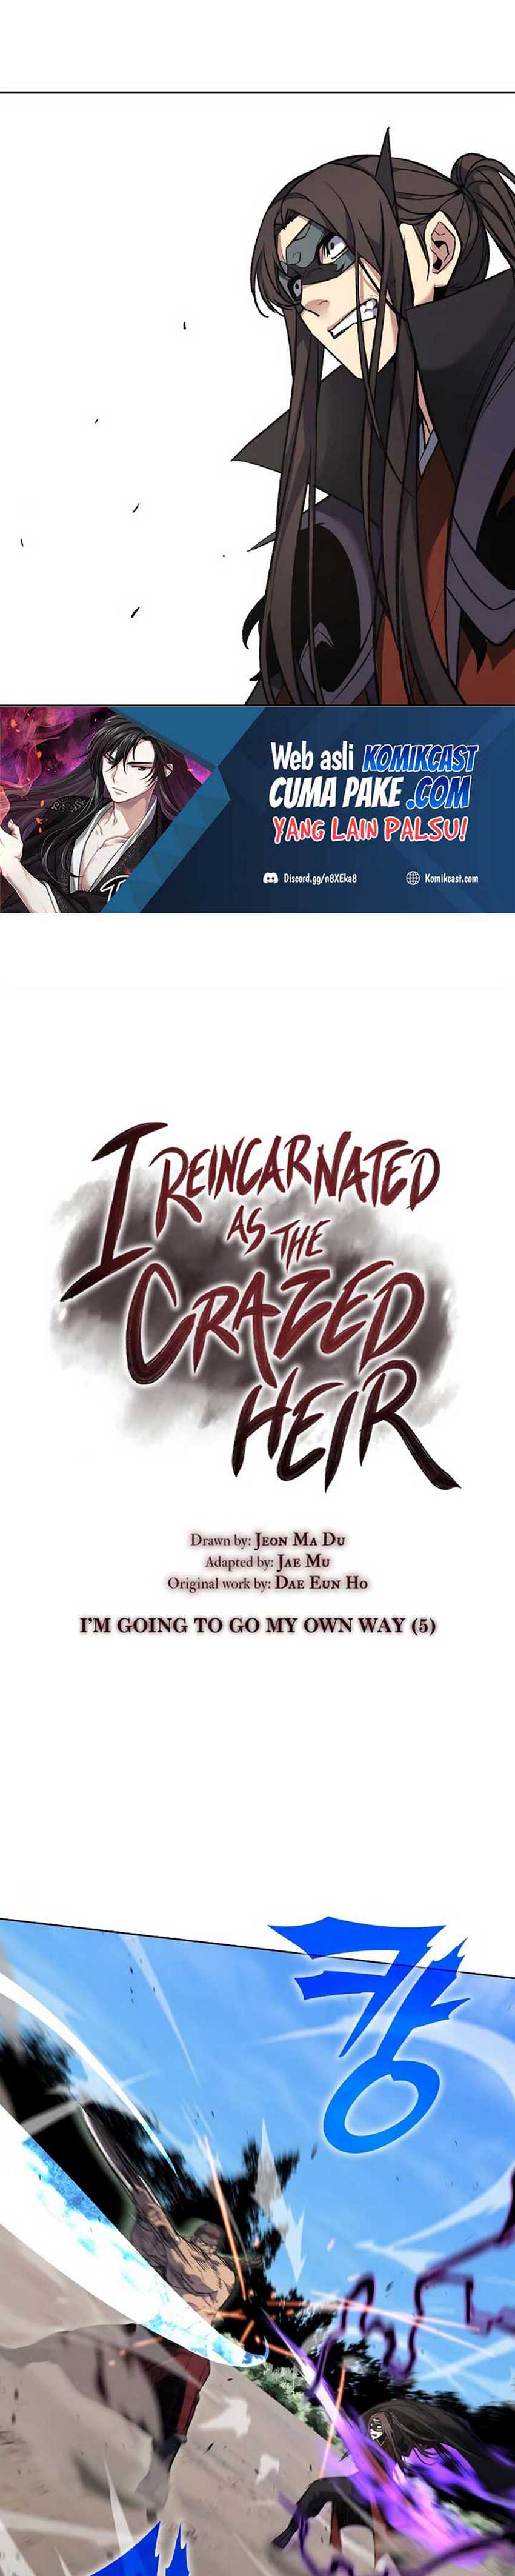 I Reincarnated As The Crazed Heir Chapter 31